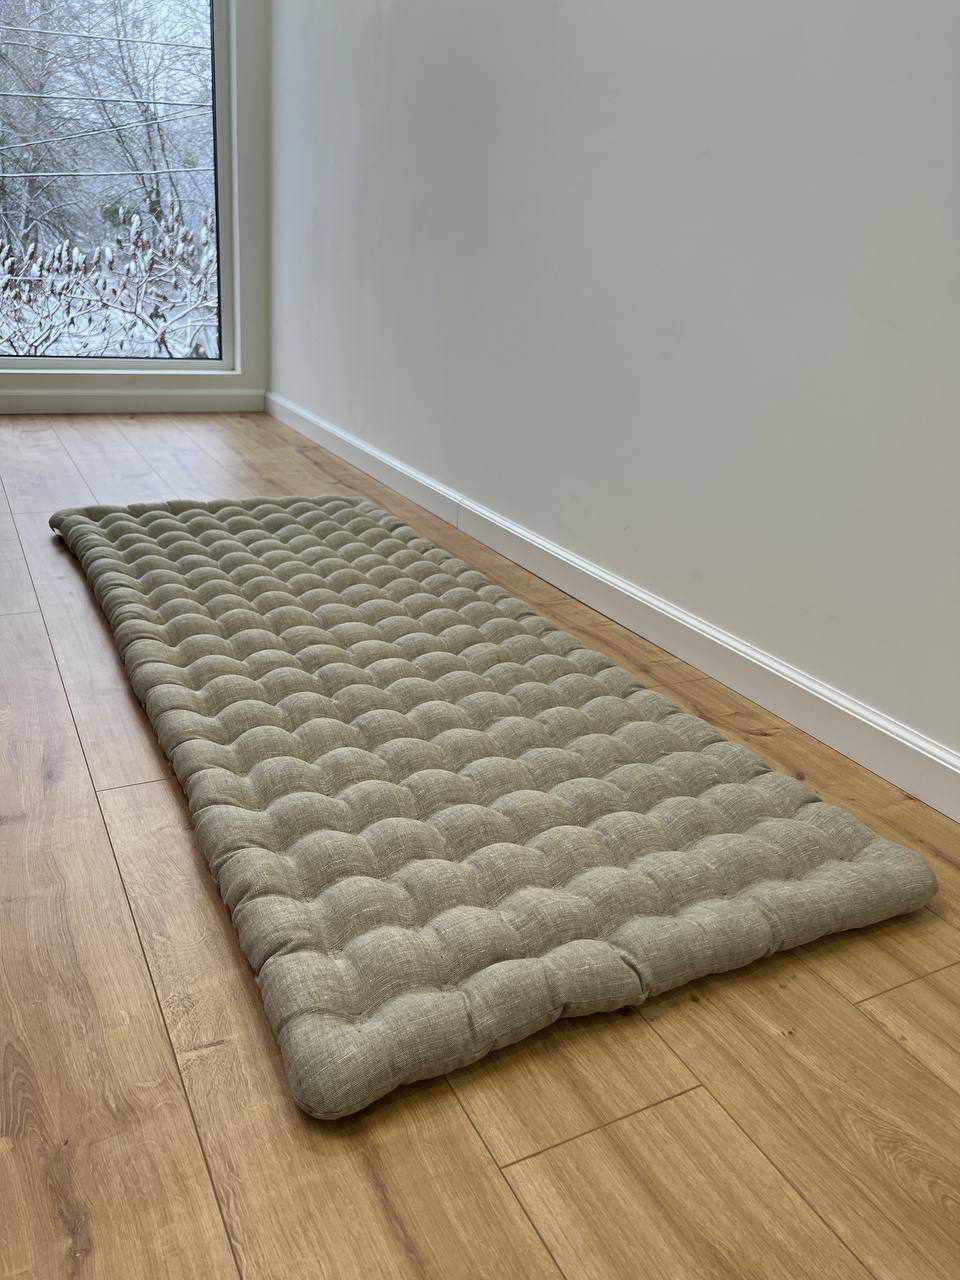 Natural linen floor topper filled organic buckwheat hulls filling yoga mat multi chamber futon in non-dyed Linen fabric